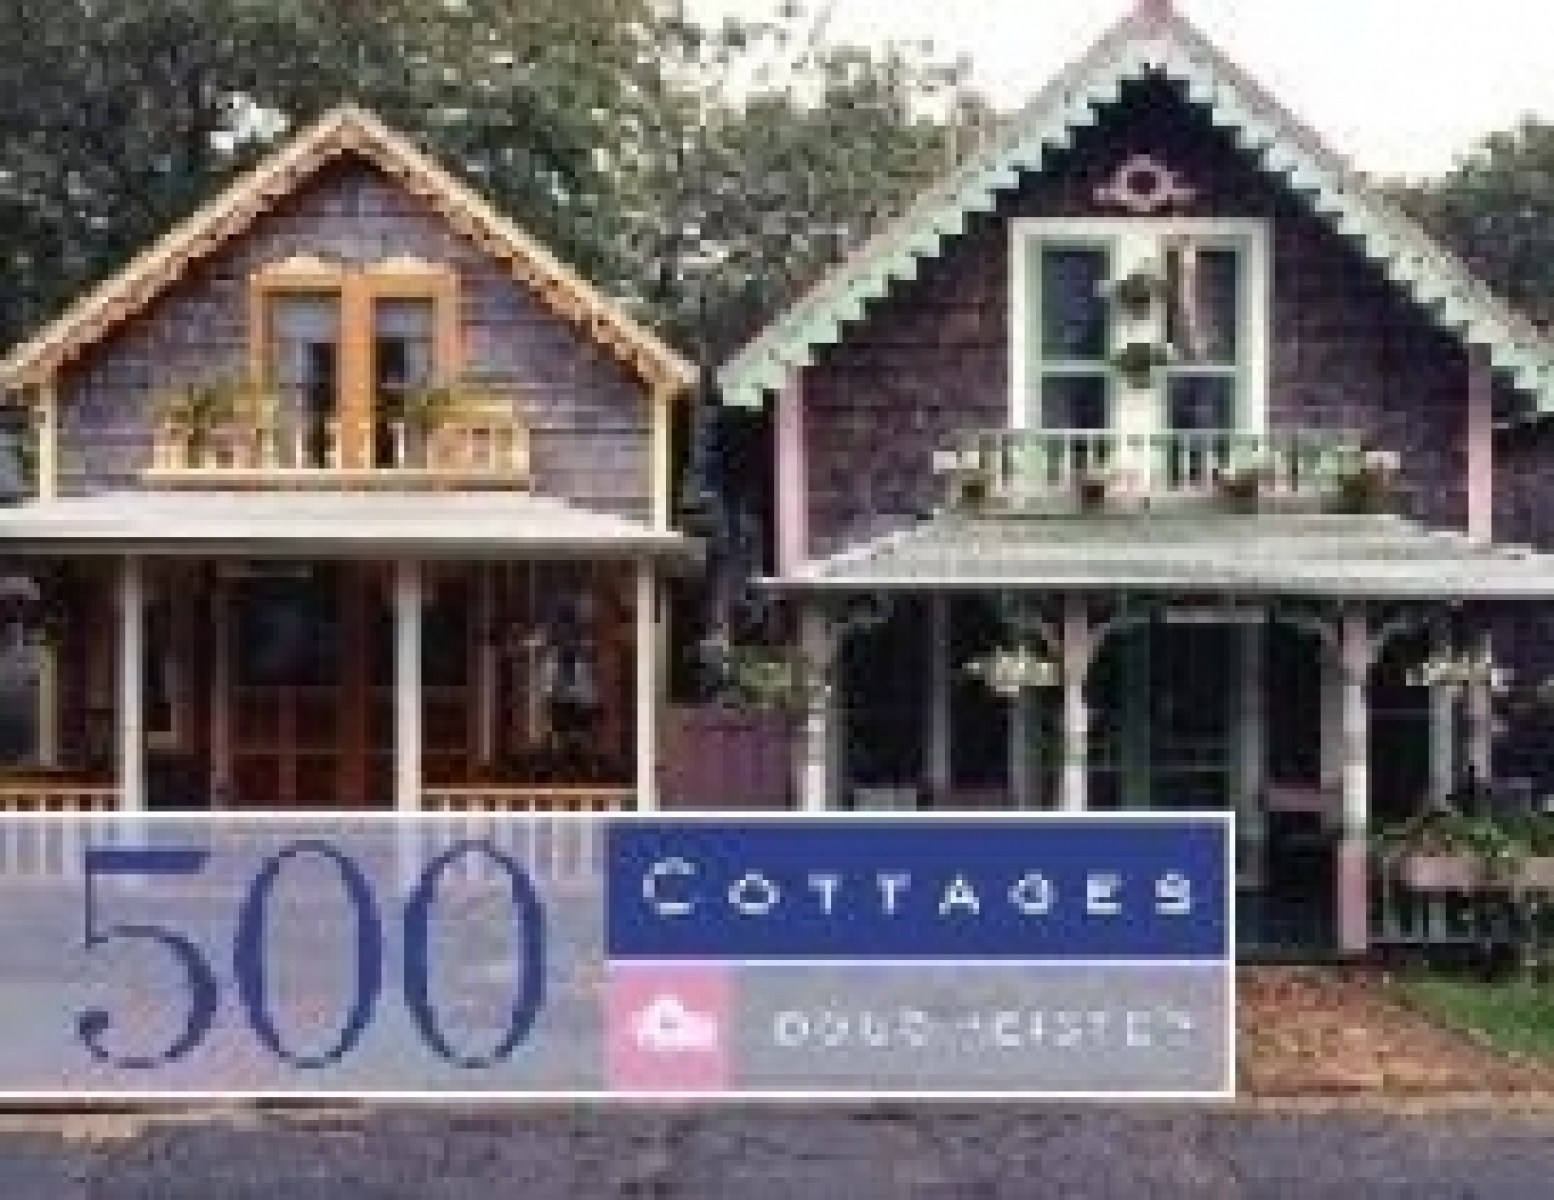 Douglas, Keister 500 Cottages 